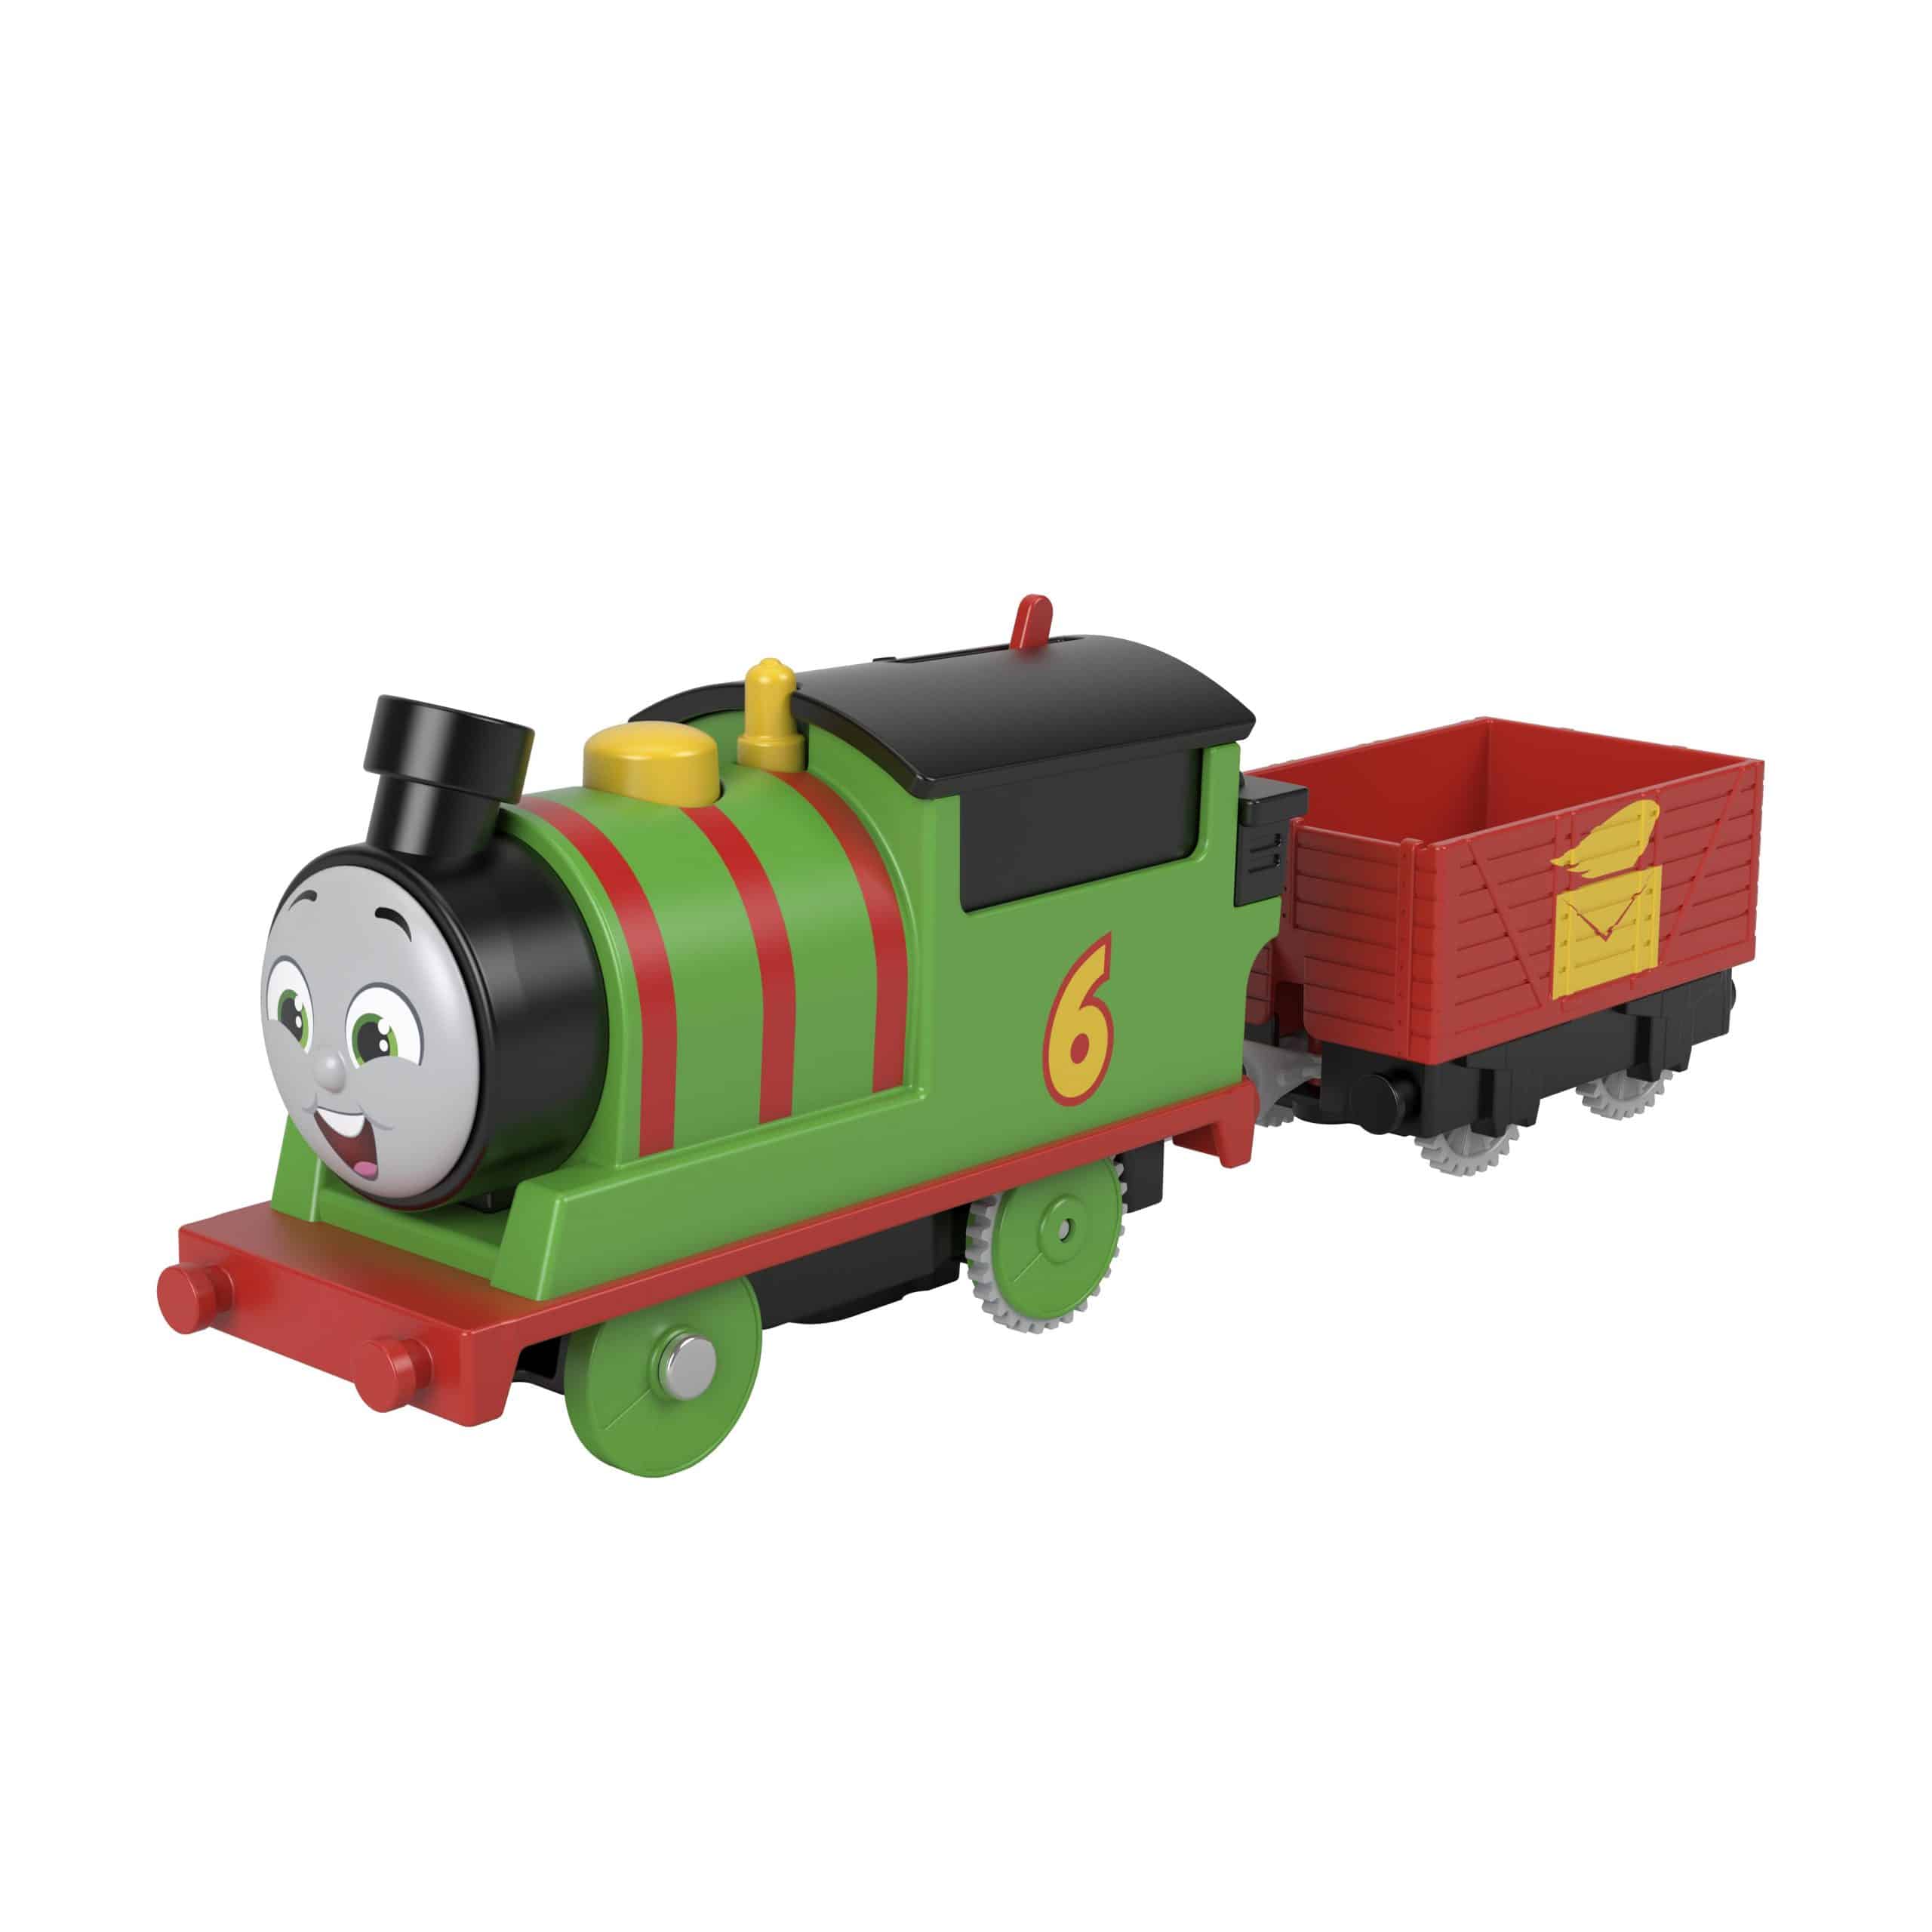 Thomas & Friends - Motorized - Percy